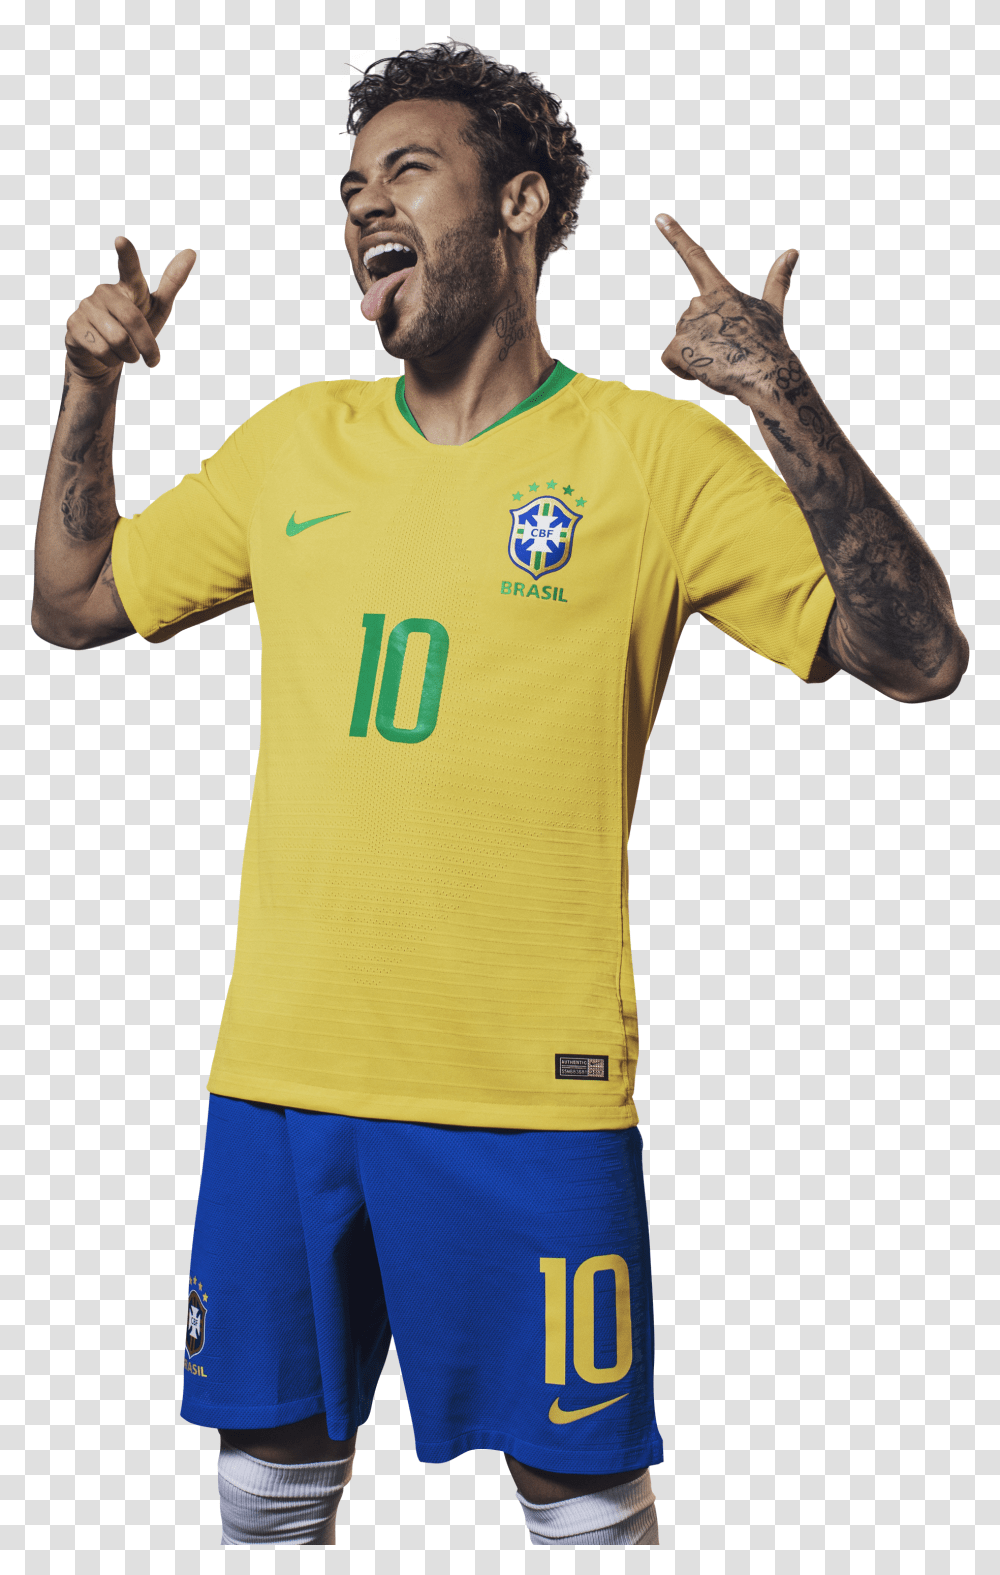 Neymar Render 2018 By Szwejzi Clipart Image Neymar Jr Transparent Png